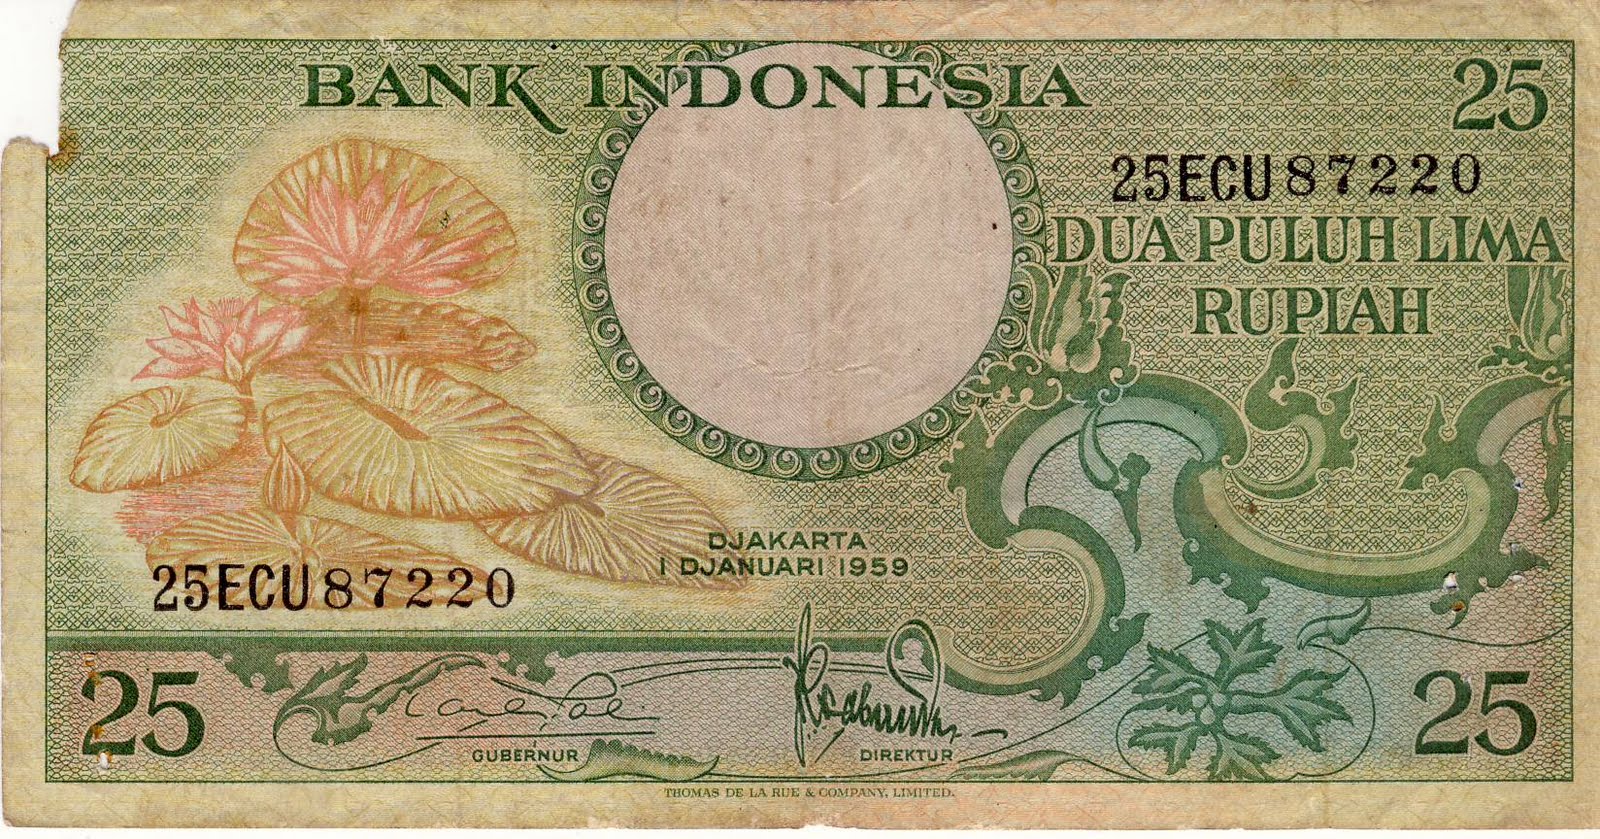  Uang  kuno Indonesia  pecahan Rp 25 dua puluh lima 